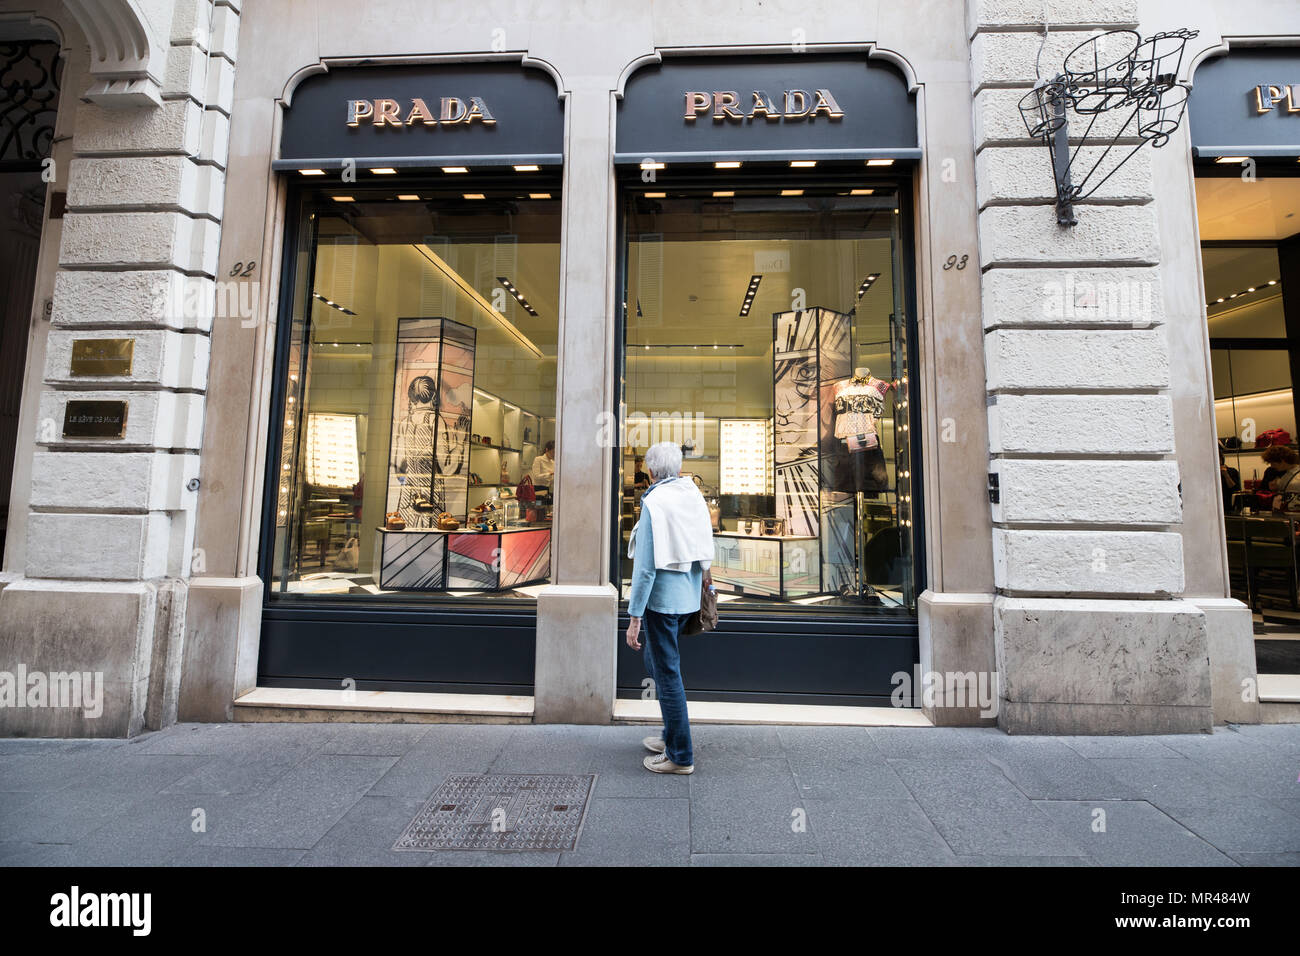 PRADA store via Condotti Rome Italy Stock Photo - Alamy